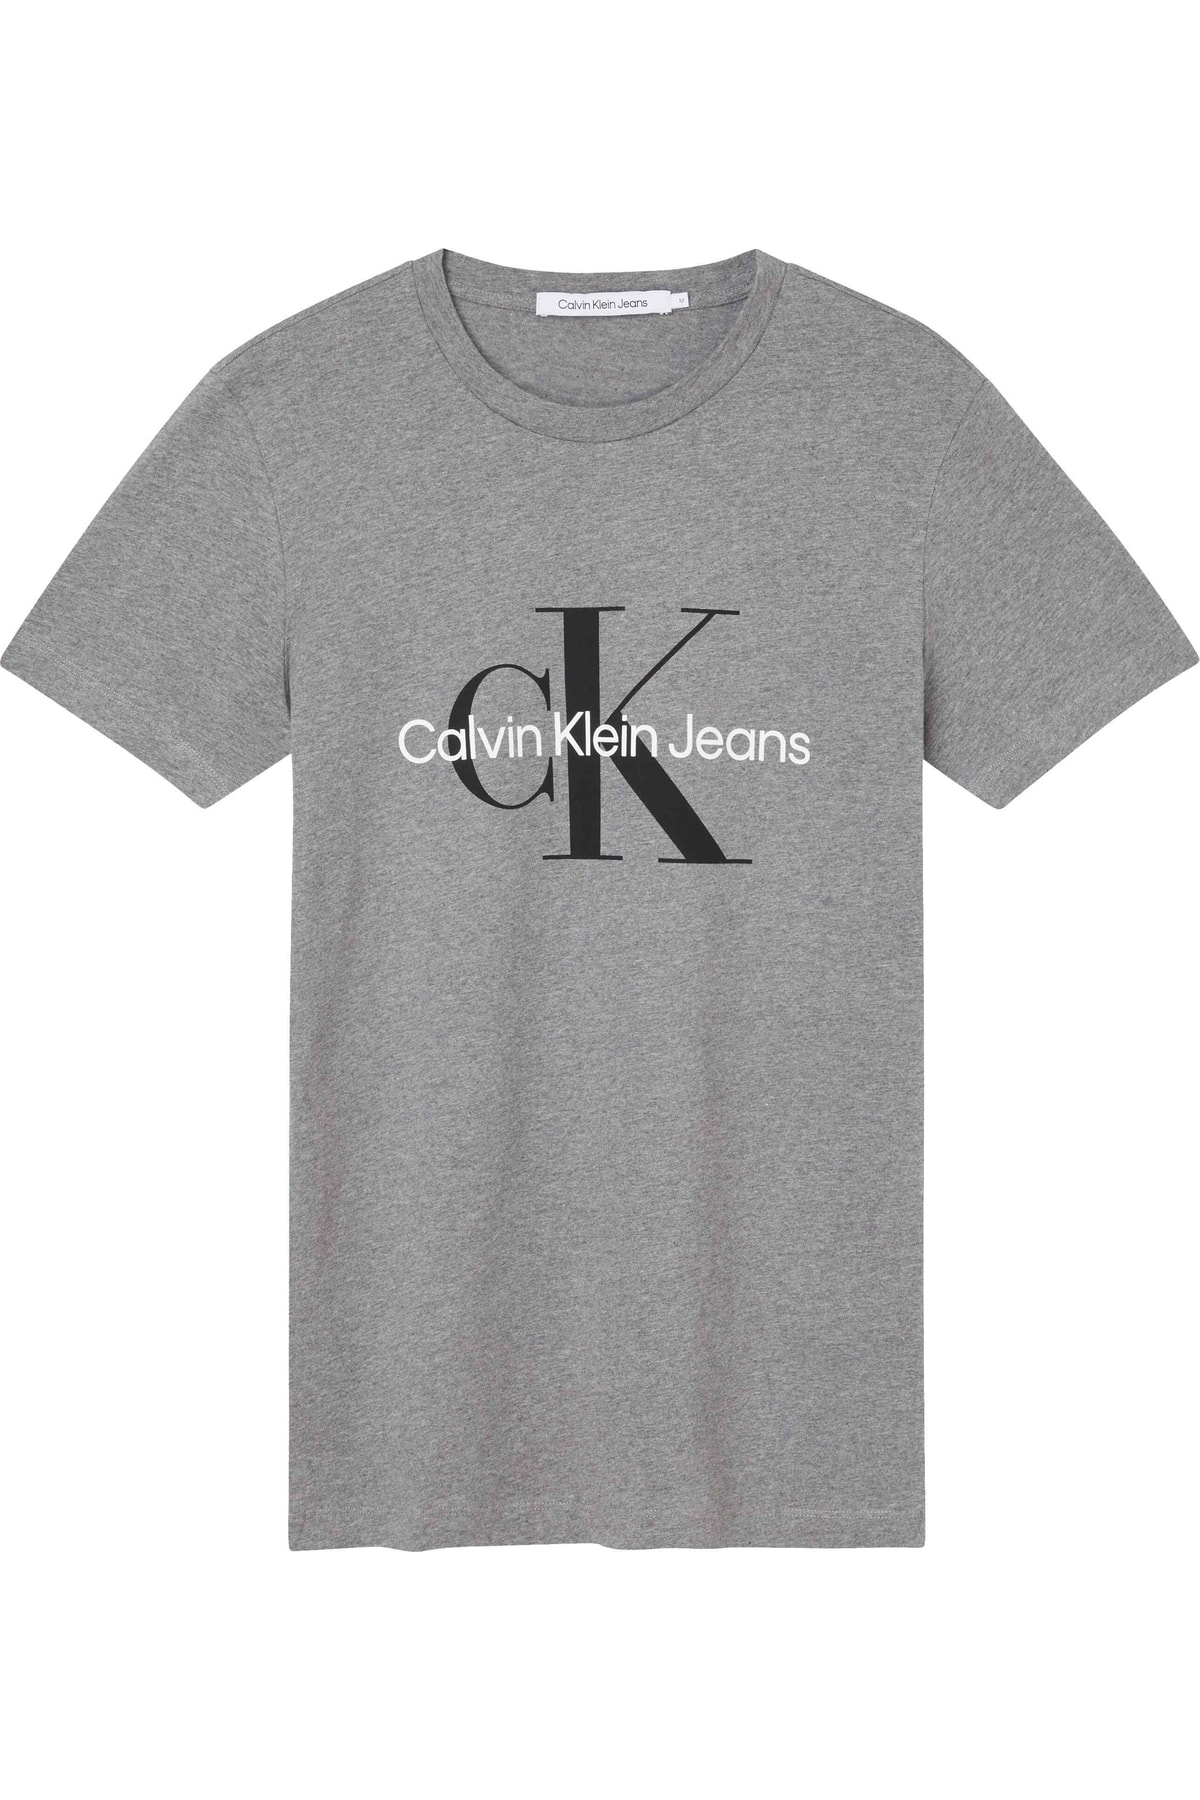 Calvin Klein T-Shirt - Gray - Regular fit - Trendyol